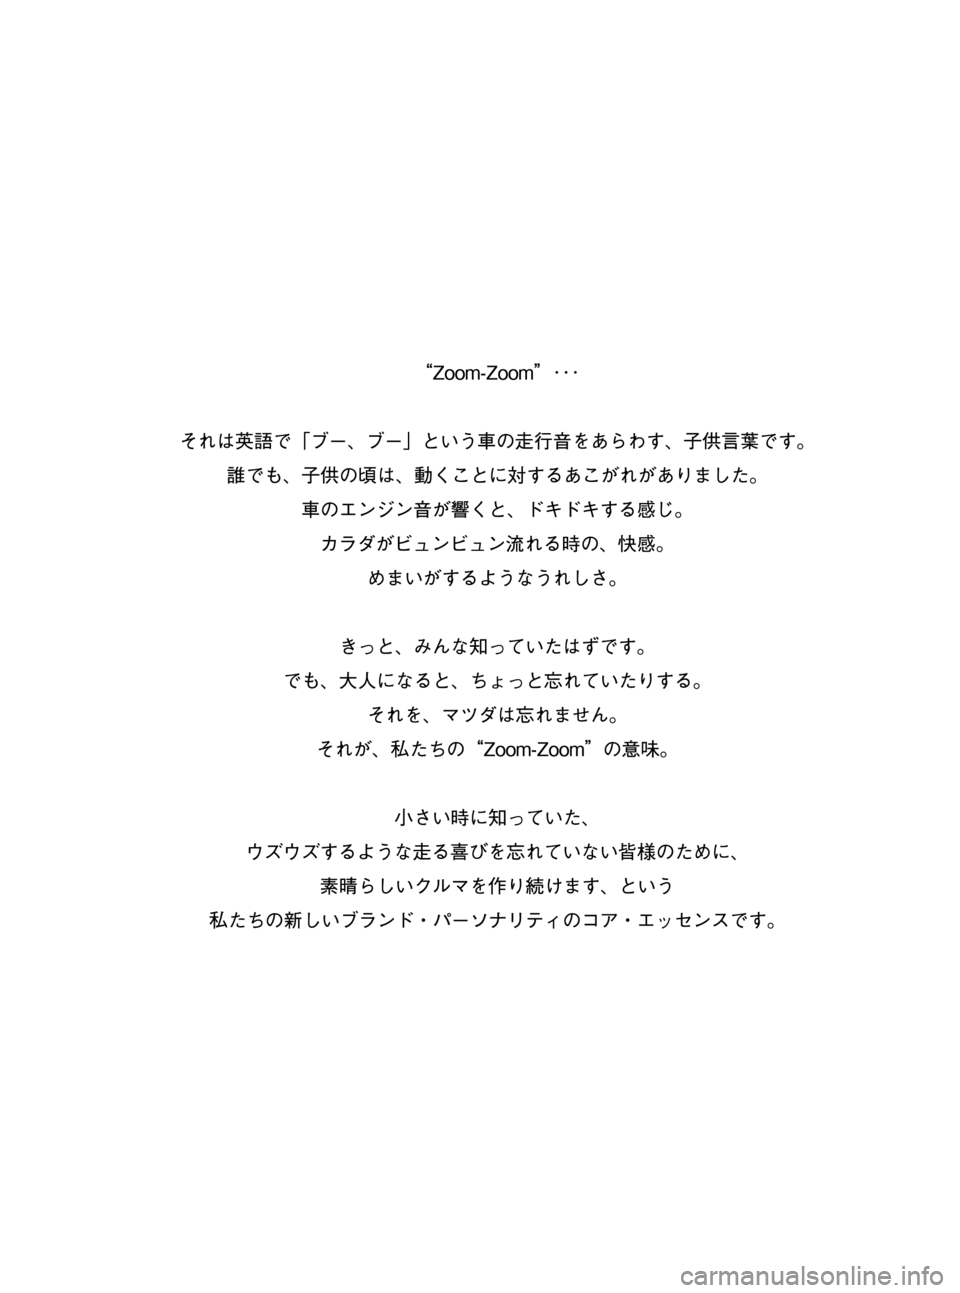 MAZDA MODEL BONGO VAN 2012  取扱説明書 (in Japanese) Black plate (1,1)
BONGO VAN_JH_初版1ページ
2012年4月25日09:28 AM
Form No.JH 